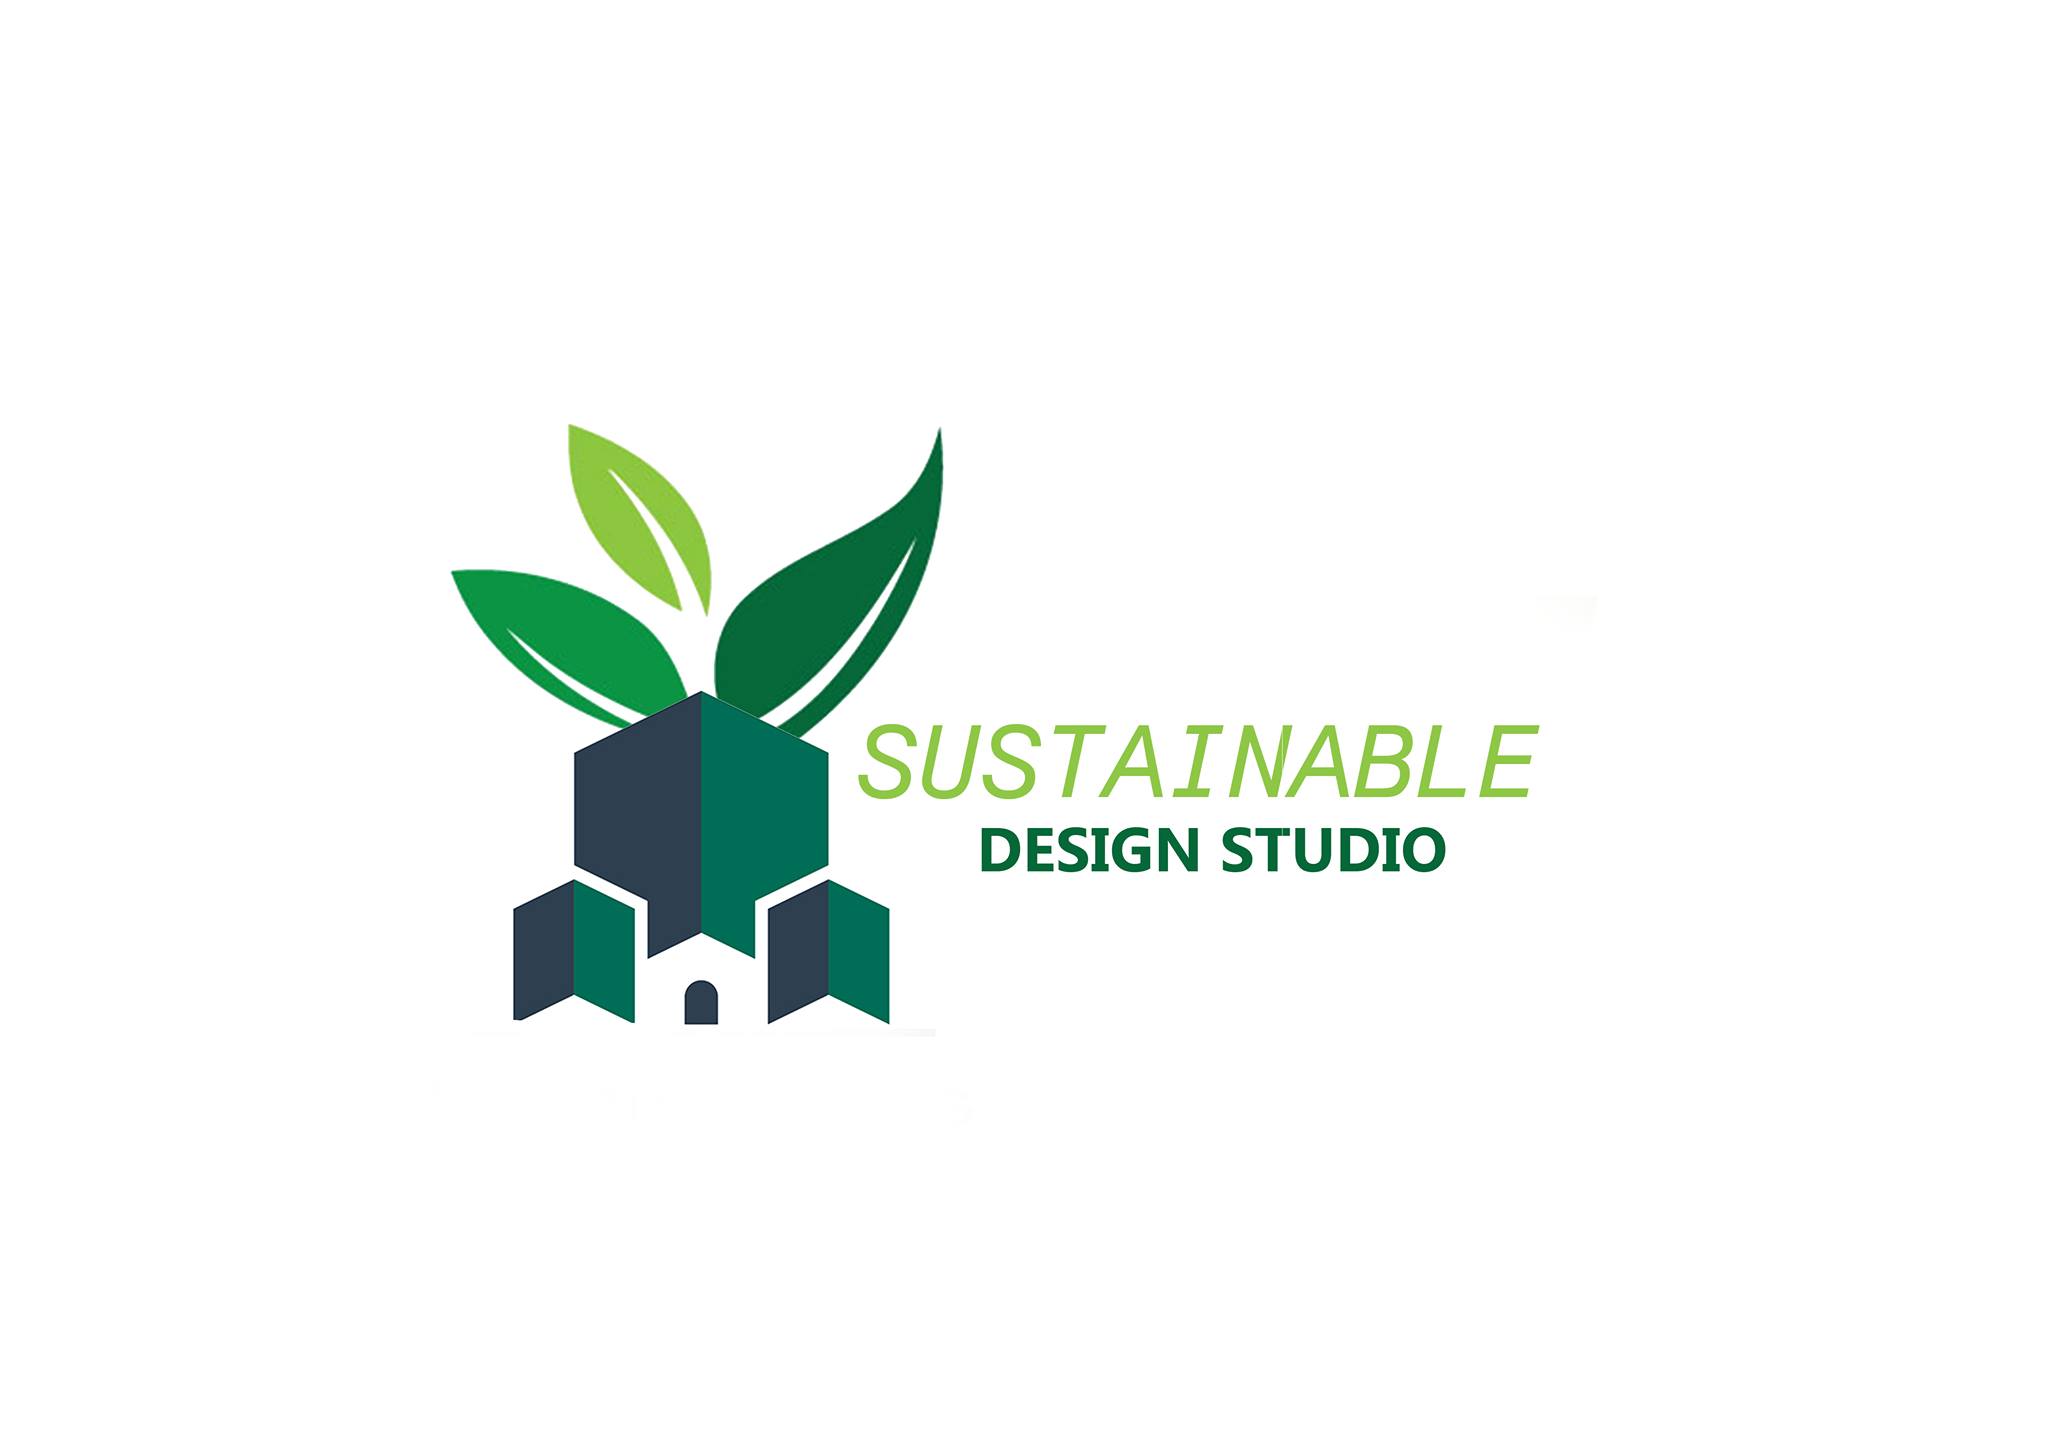 Sustainable design studio|IT Services|Professional Services